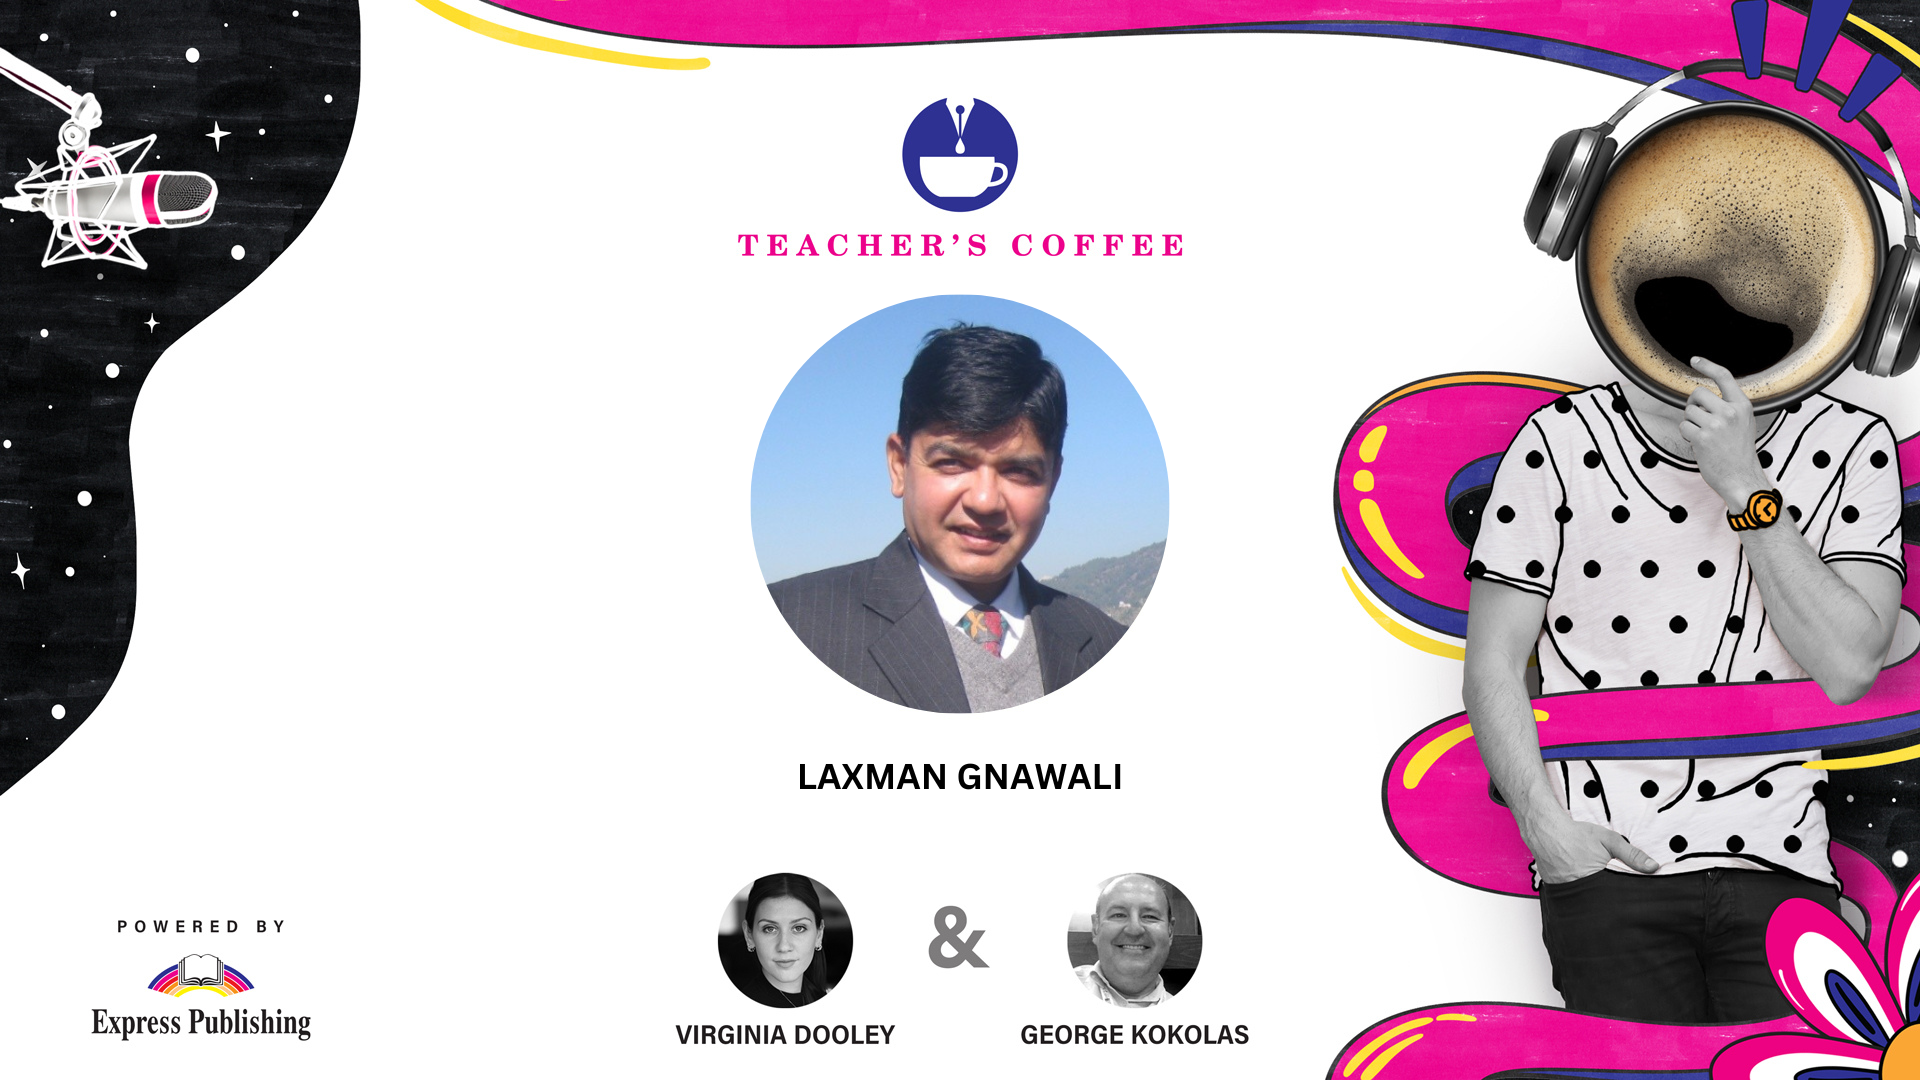 S07E23 Teacher's Coffee with Laxman Gnawali